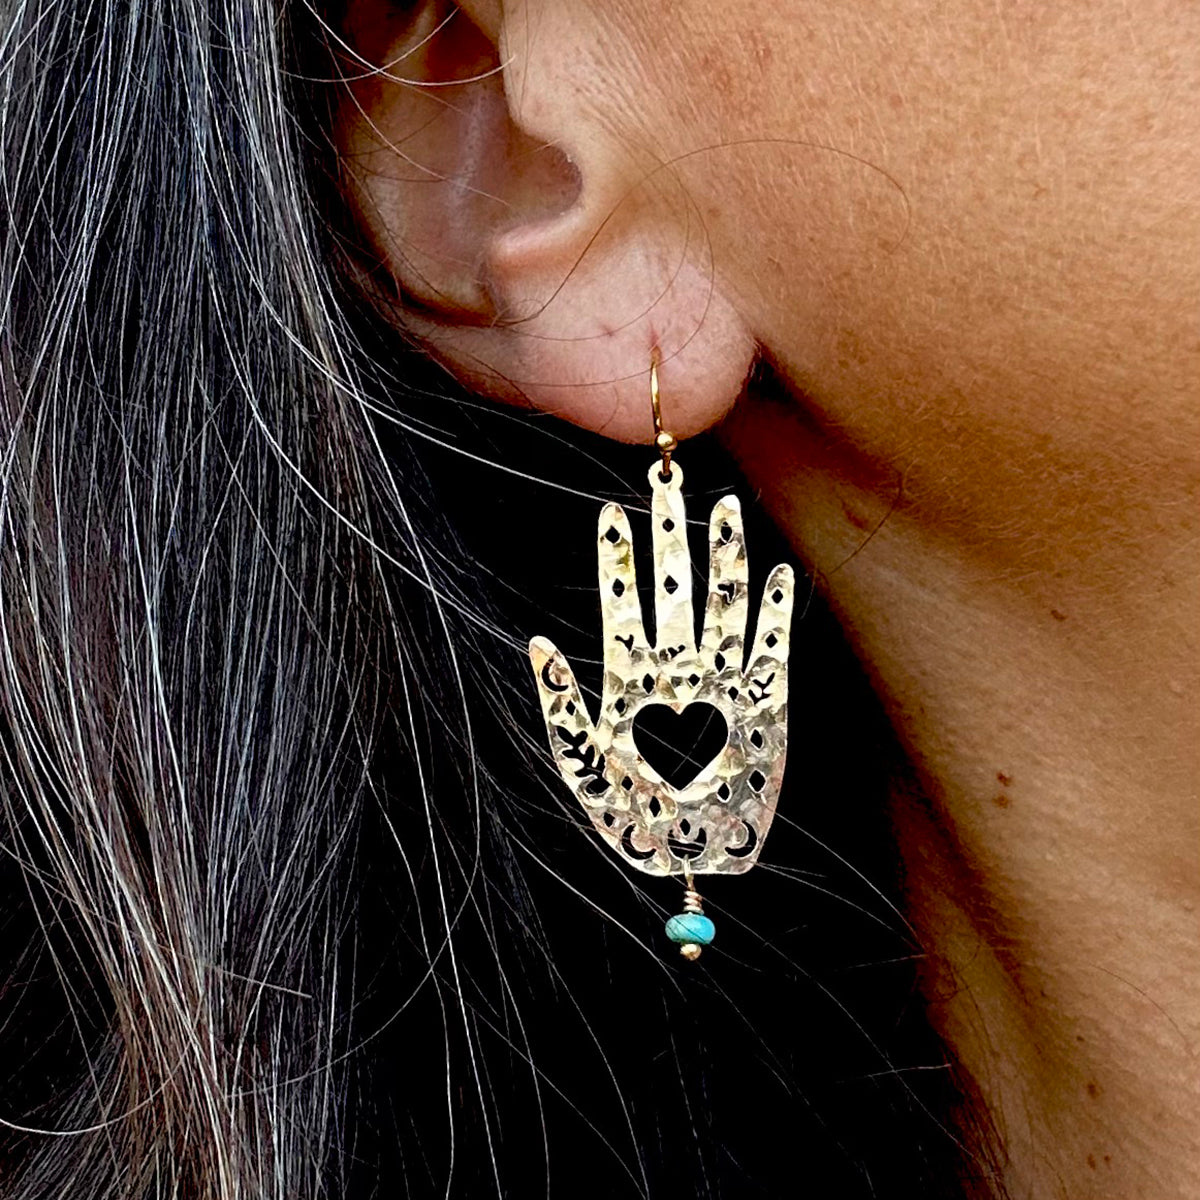 Healing hands earrings with semi precious bead NEW!